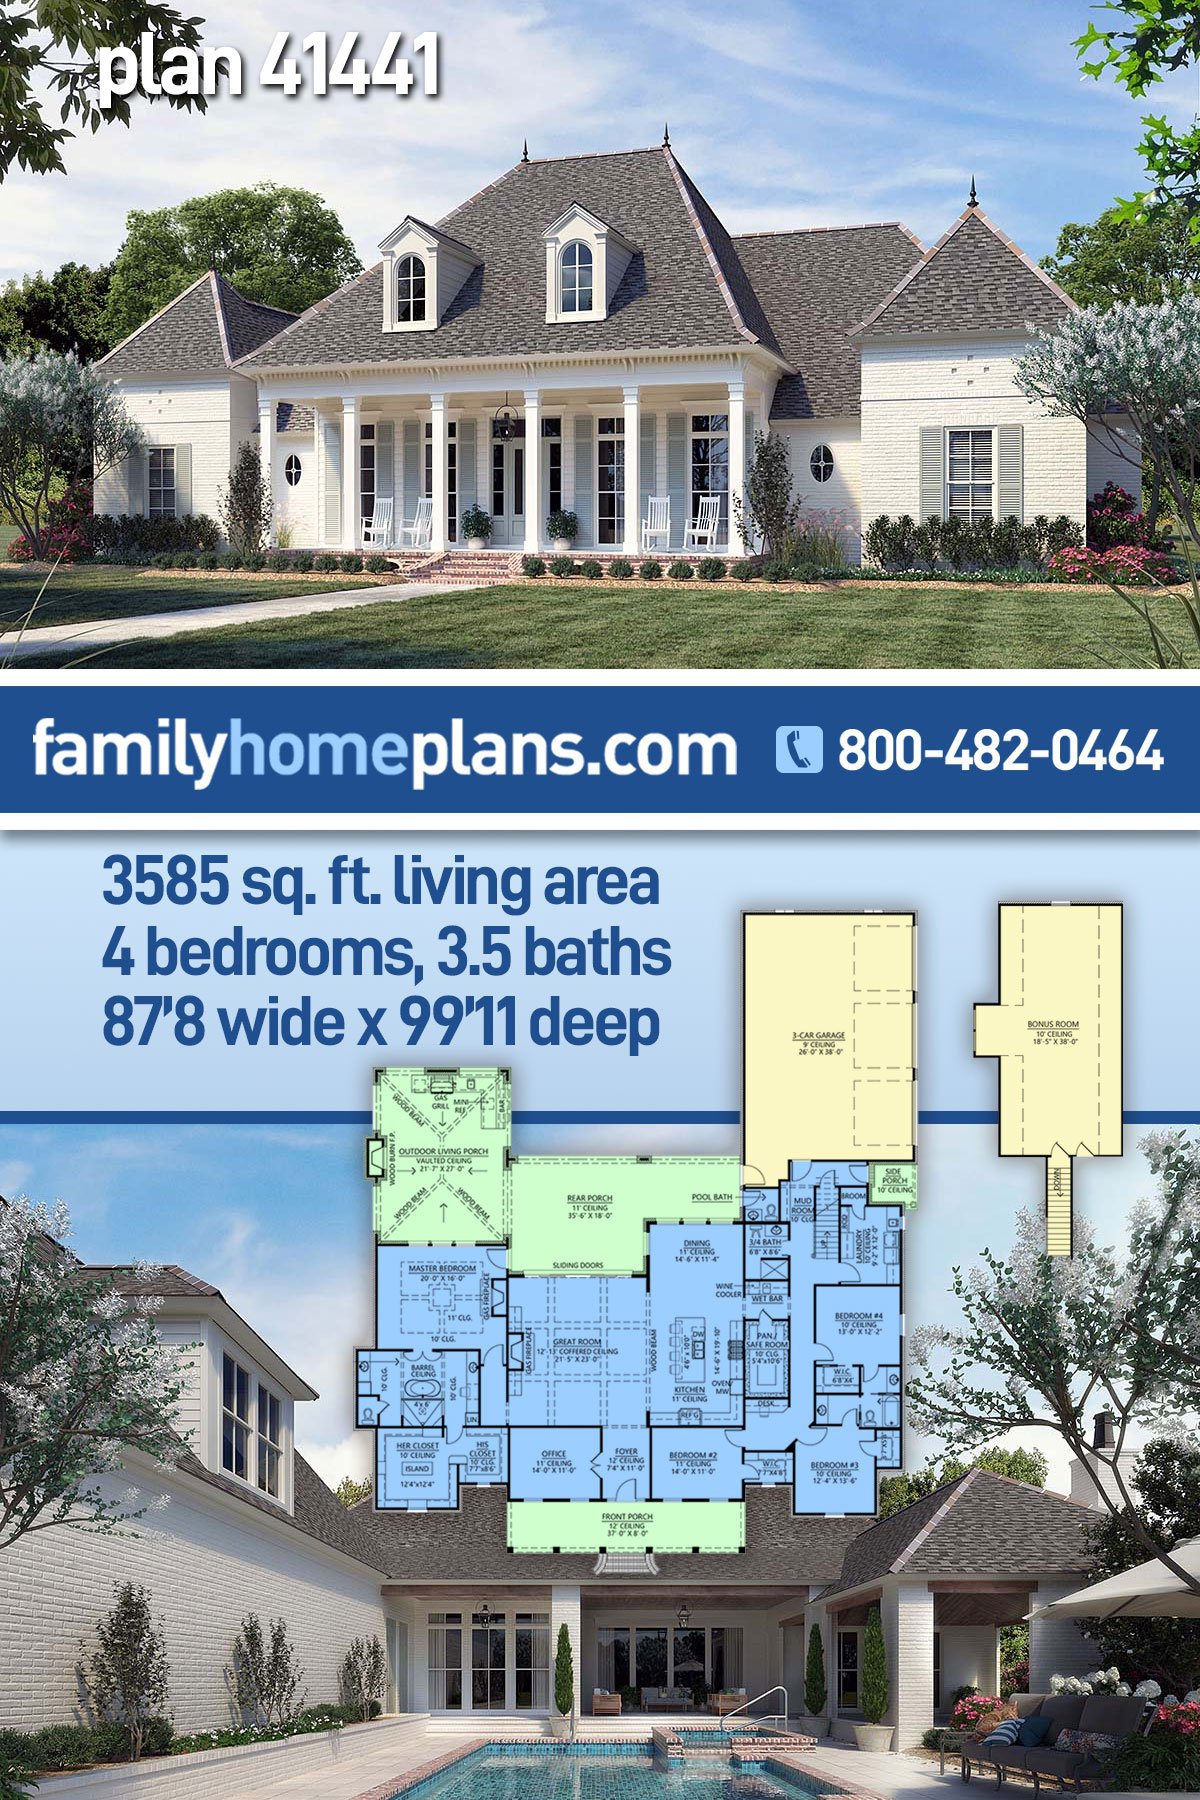 House Plan 41441